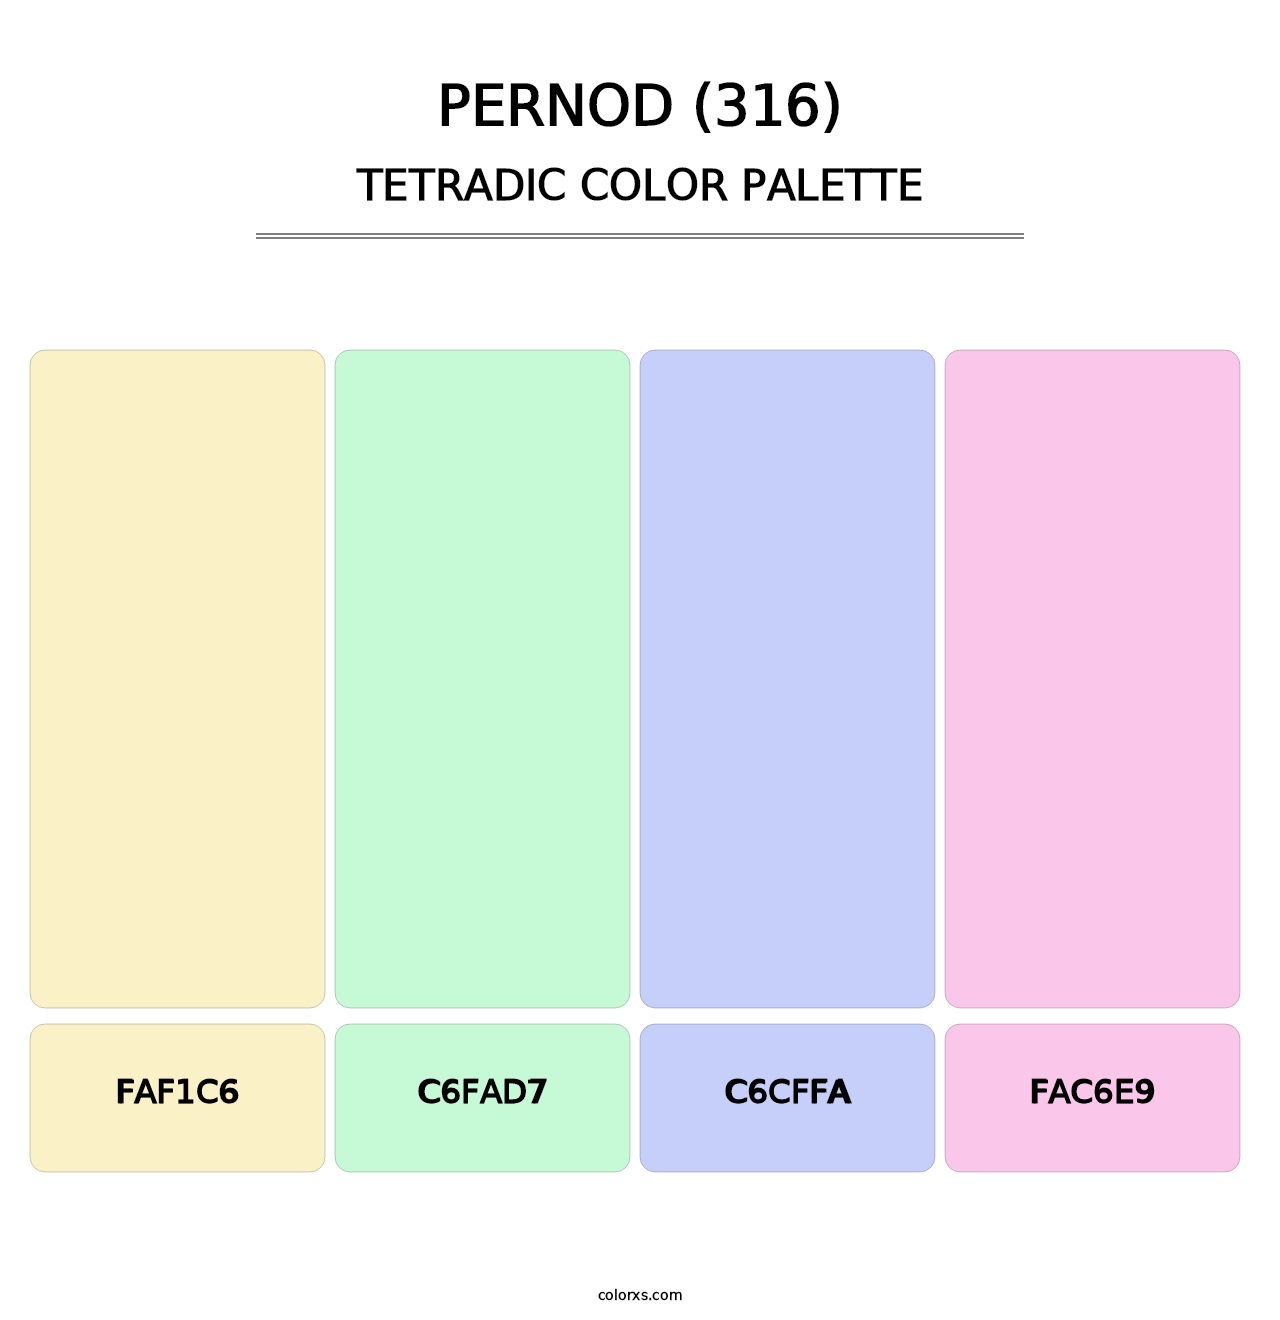 Pernod (316) - Tetradic Color Palette